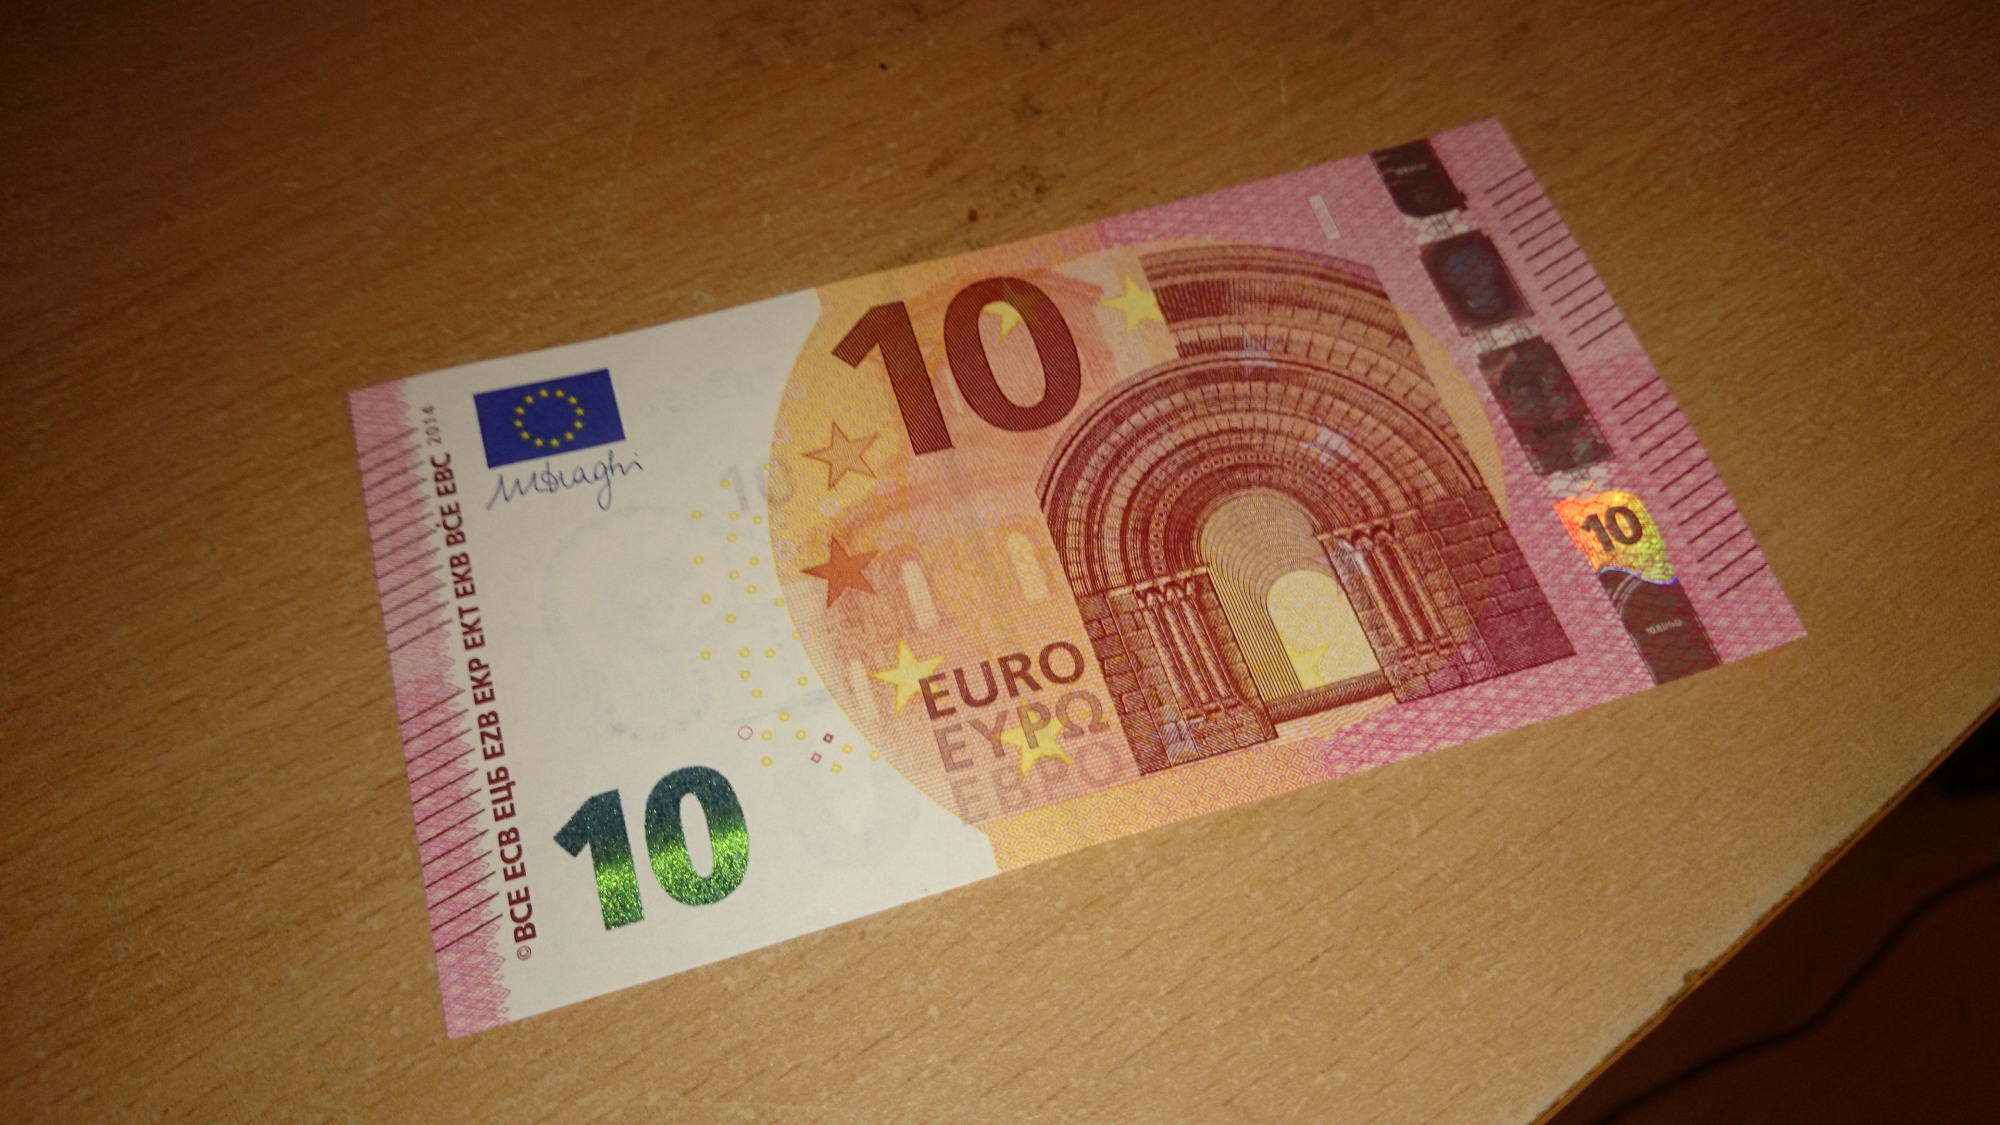 Фото 5 евро купюры с двух сторон